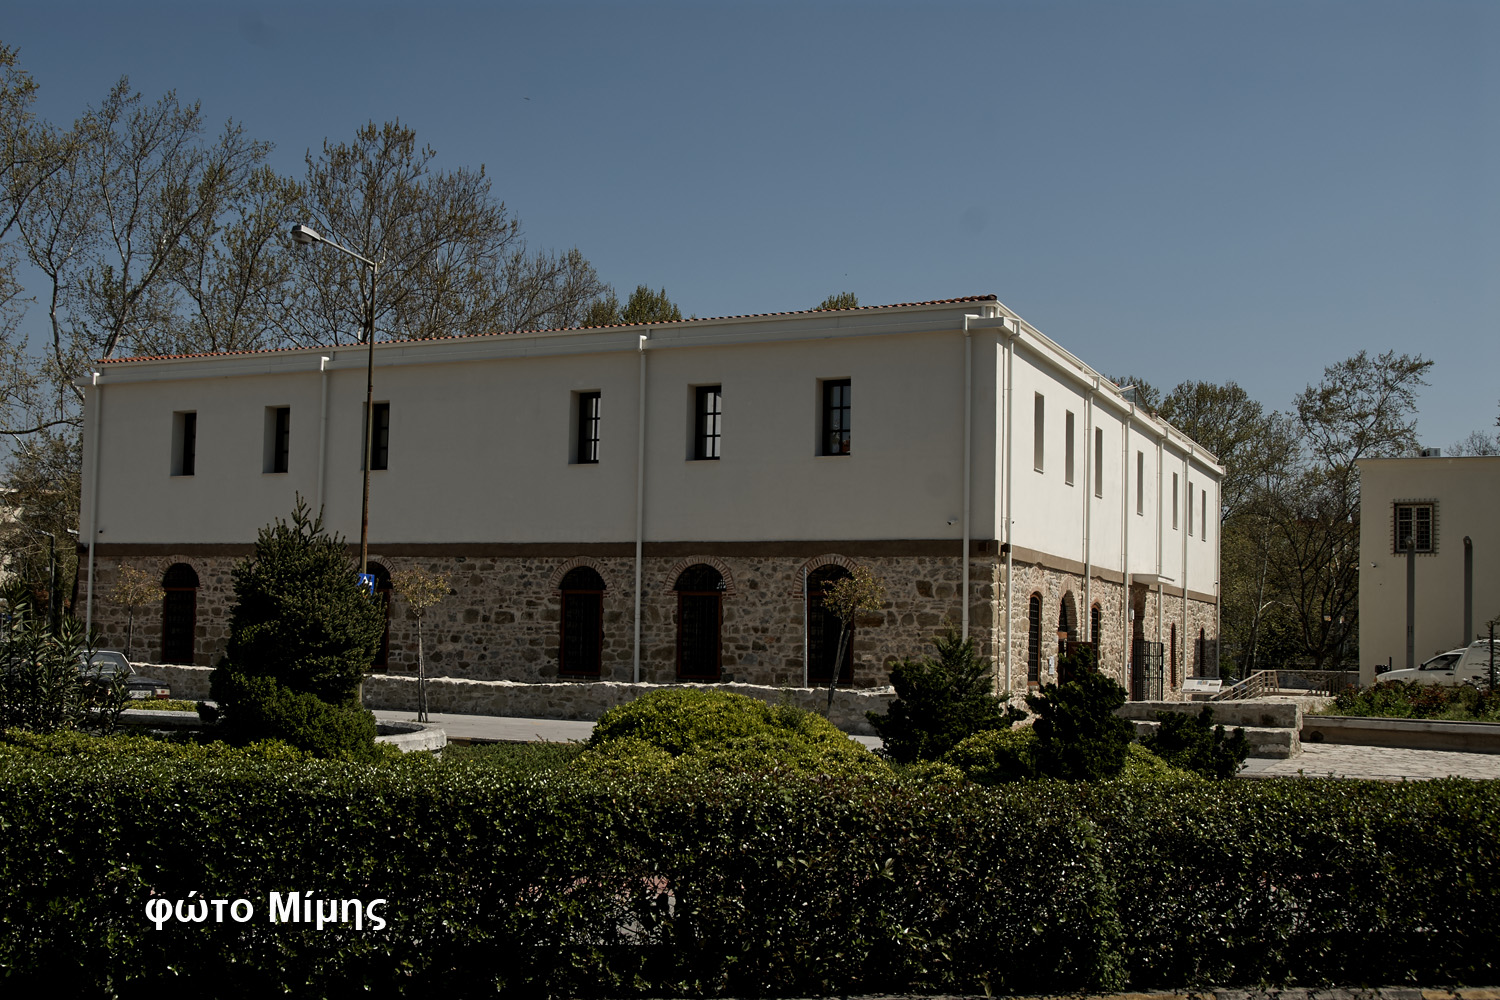 Aνοικτή επιστoλή για το Μουσείο Τσιτσάνη στις παλιές φυλακές 